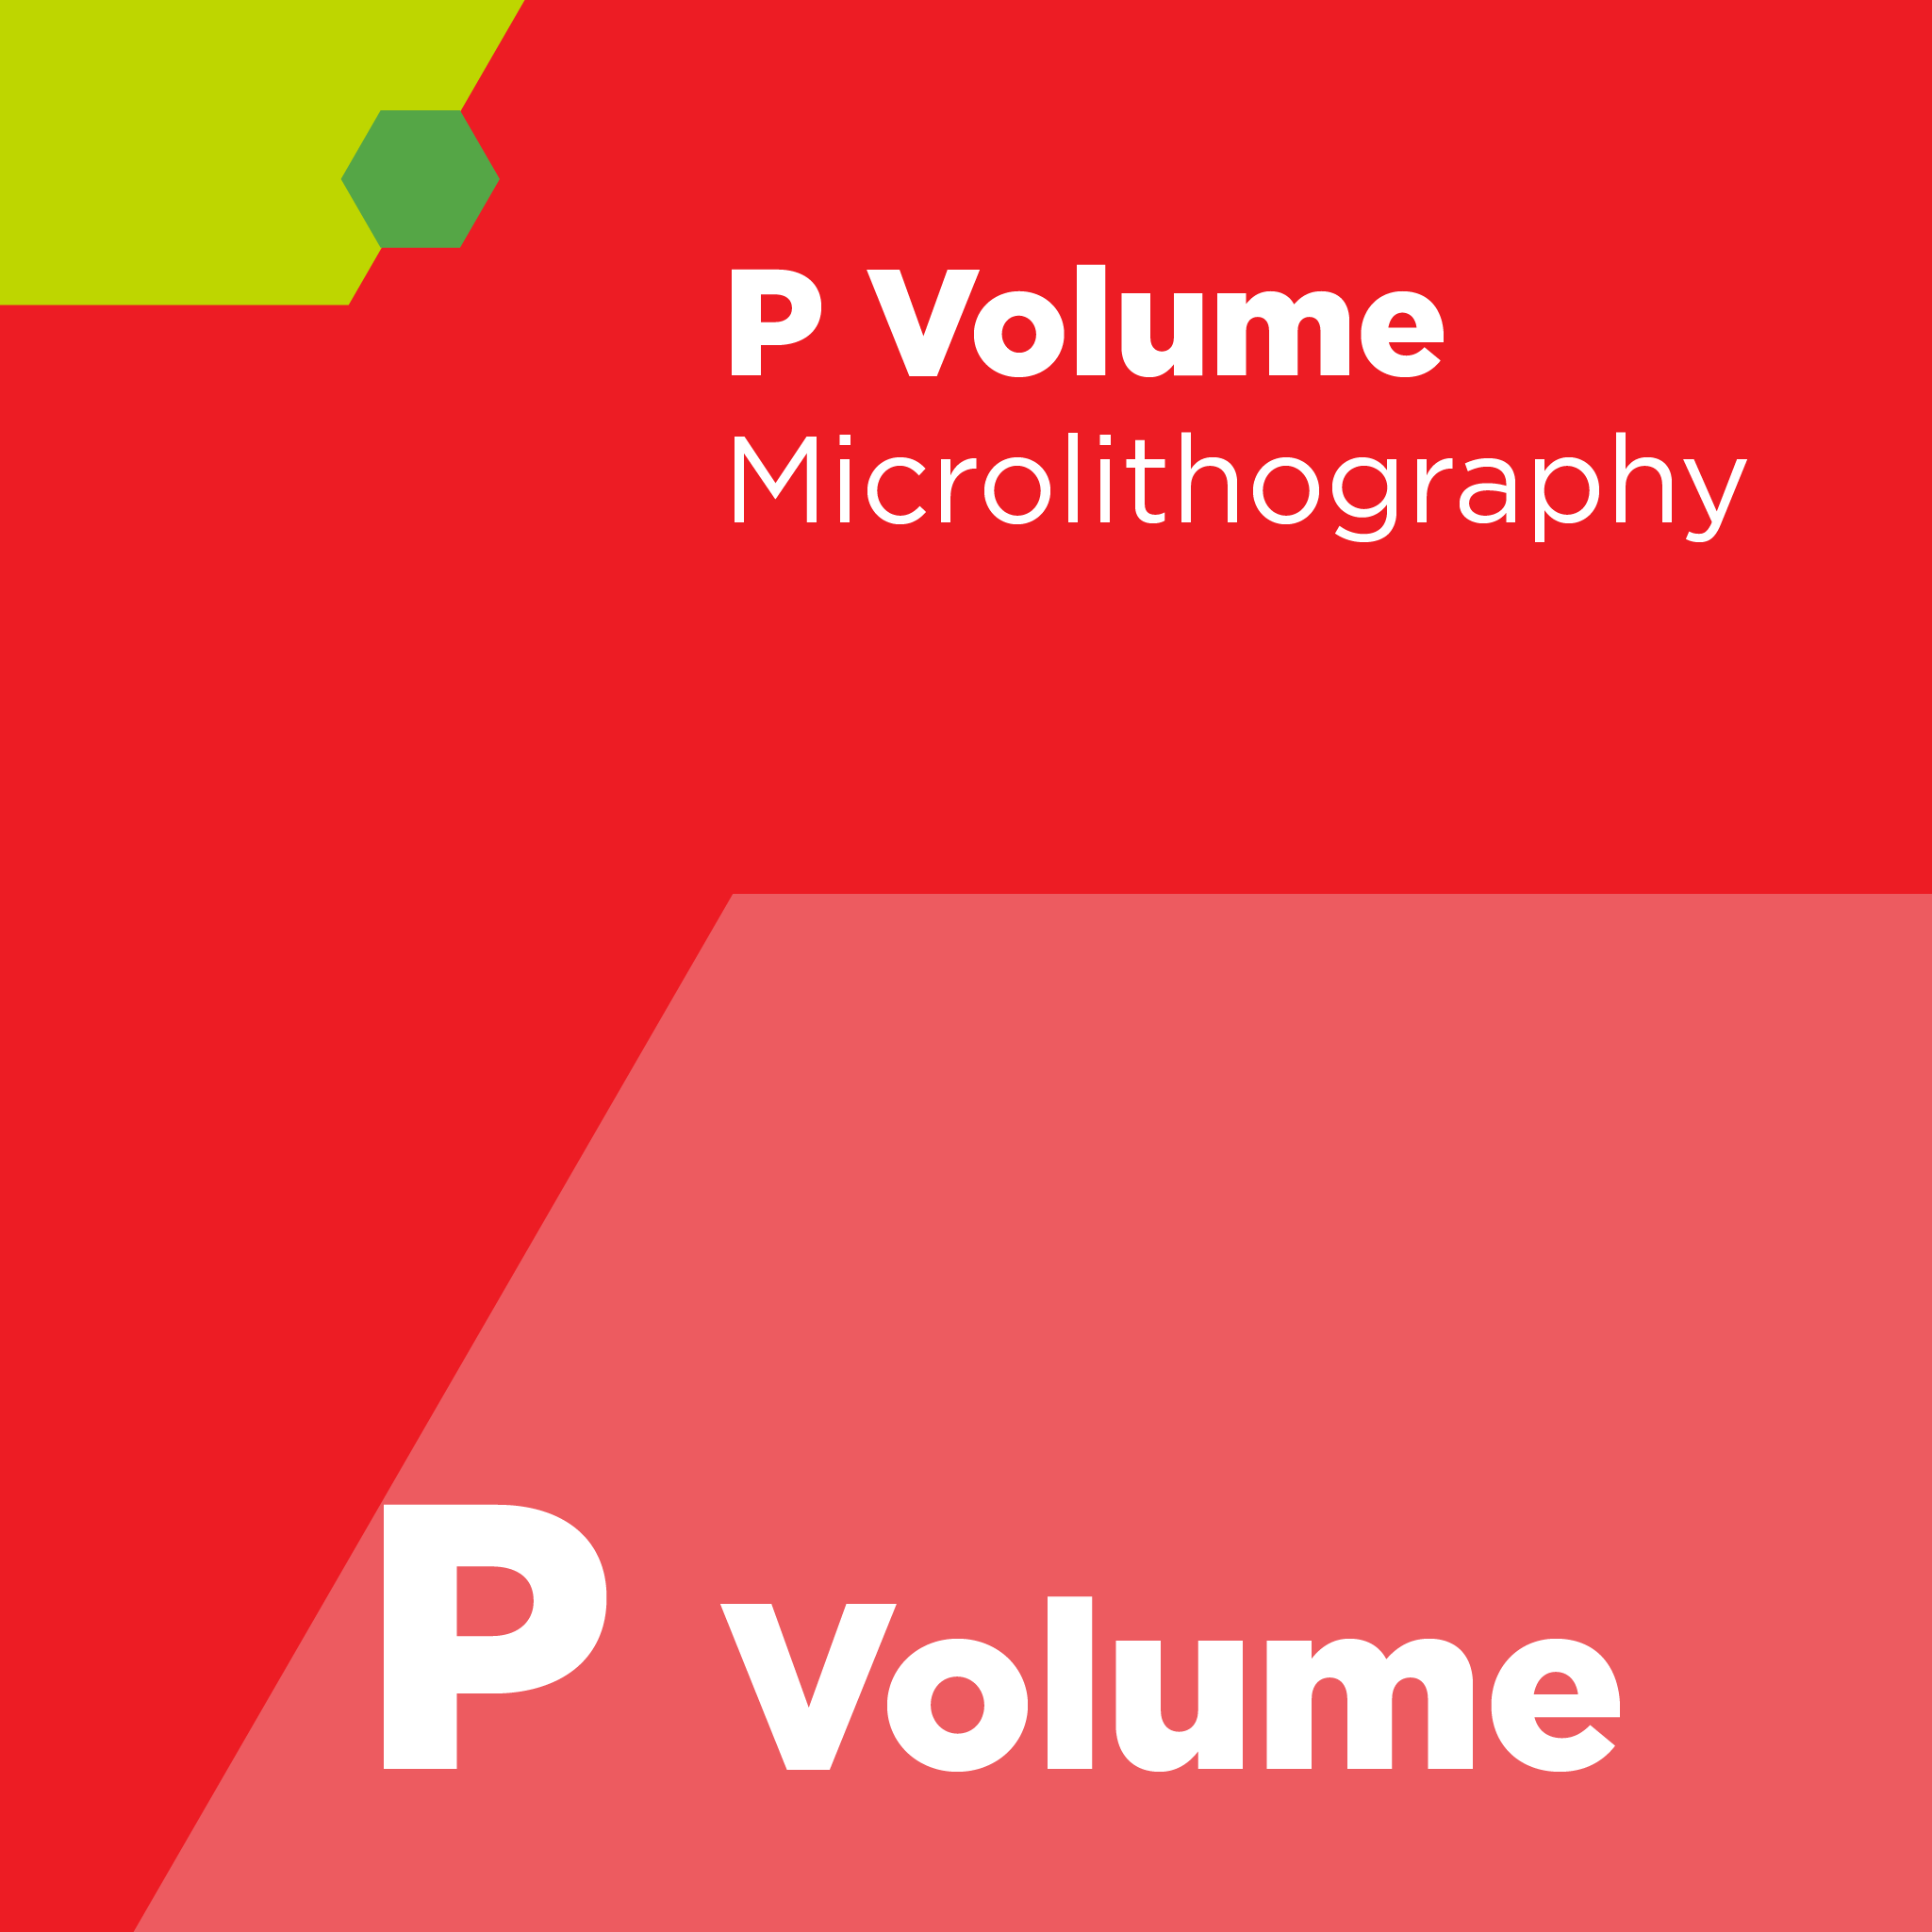 P03000 - SEMI P30 - Practice for Catalog Publication of Critical Dimension Measurement Scanning Electron Microscopes (CD-SEM)